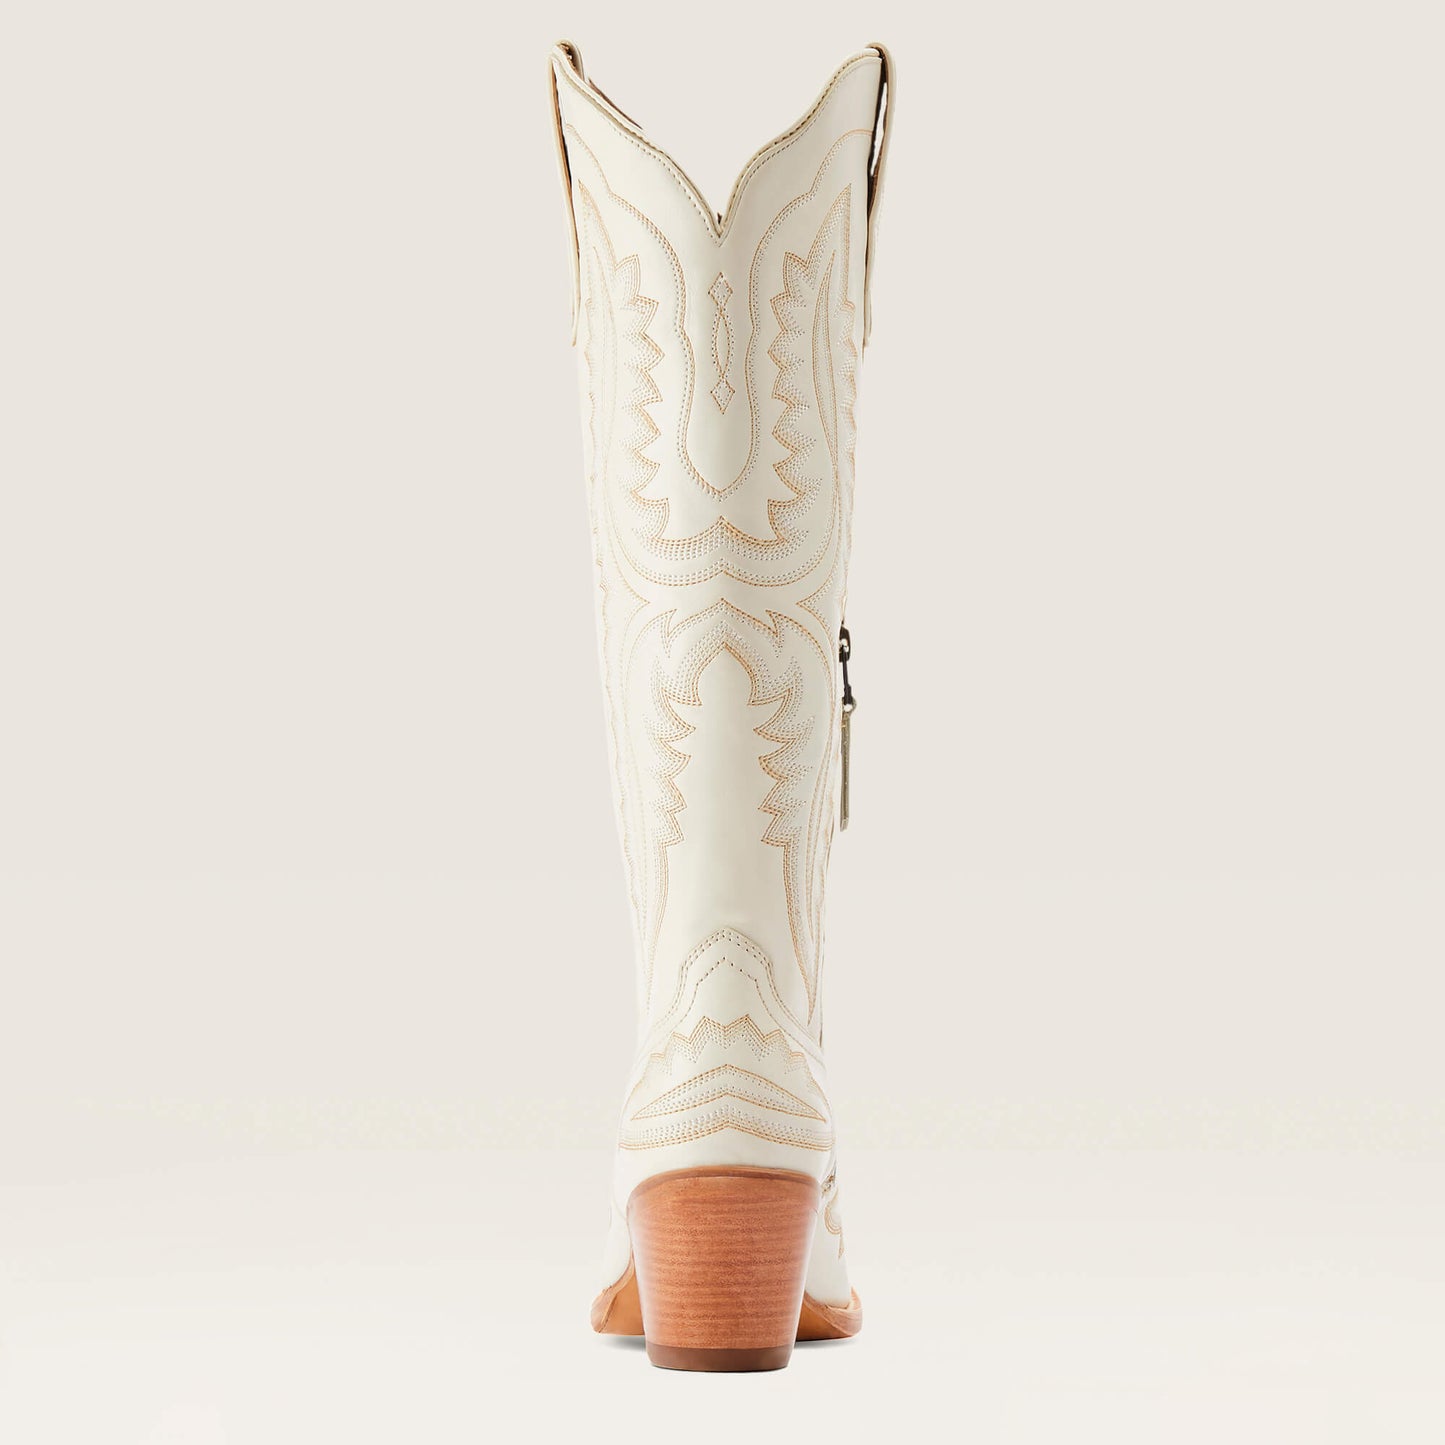 Women's Casanova Western Boots by Ariat